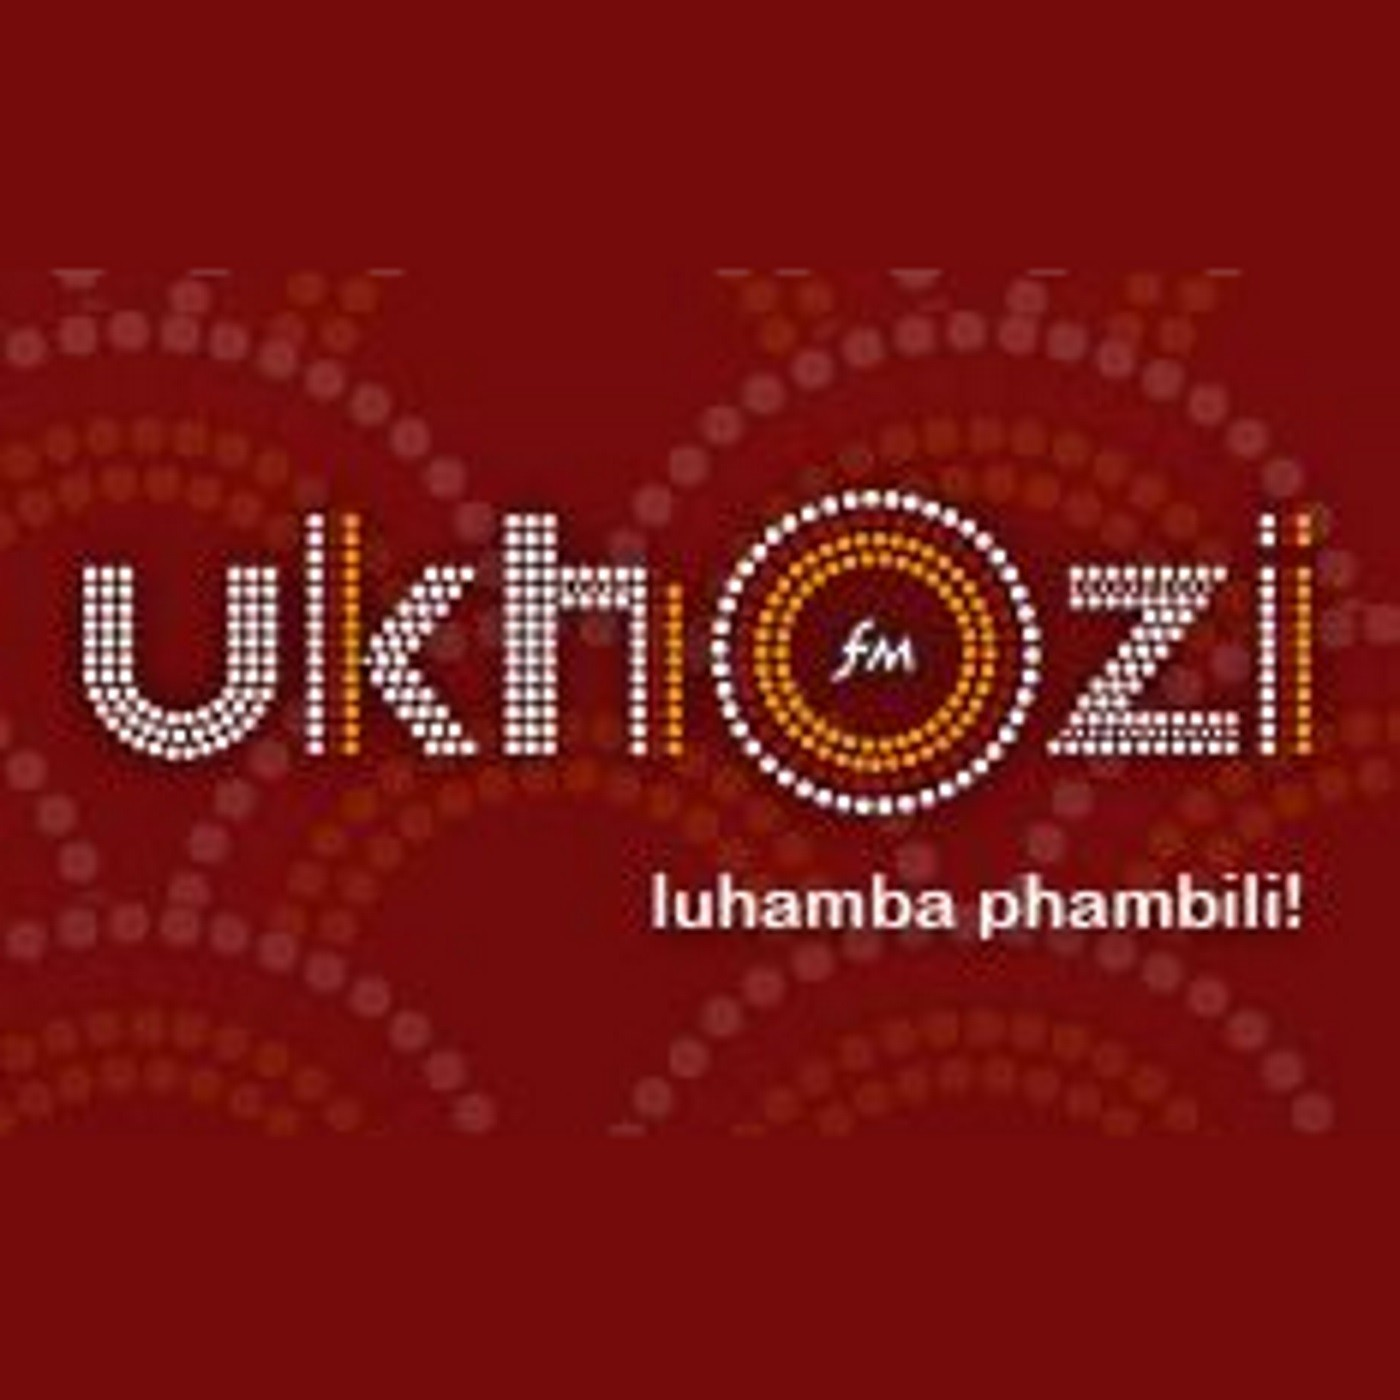 Hlaziya Ipolitiki no Nhlanhla Mtaka : Iminikelo Yomkhankaso kaCR17 / Mayor Zandile Gumede